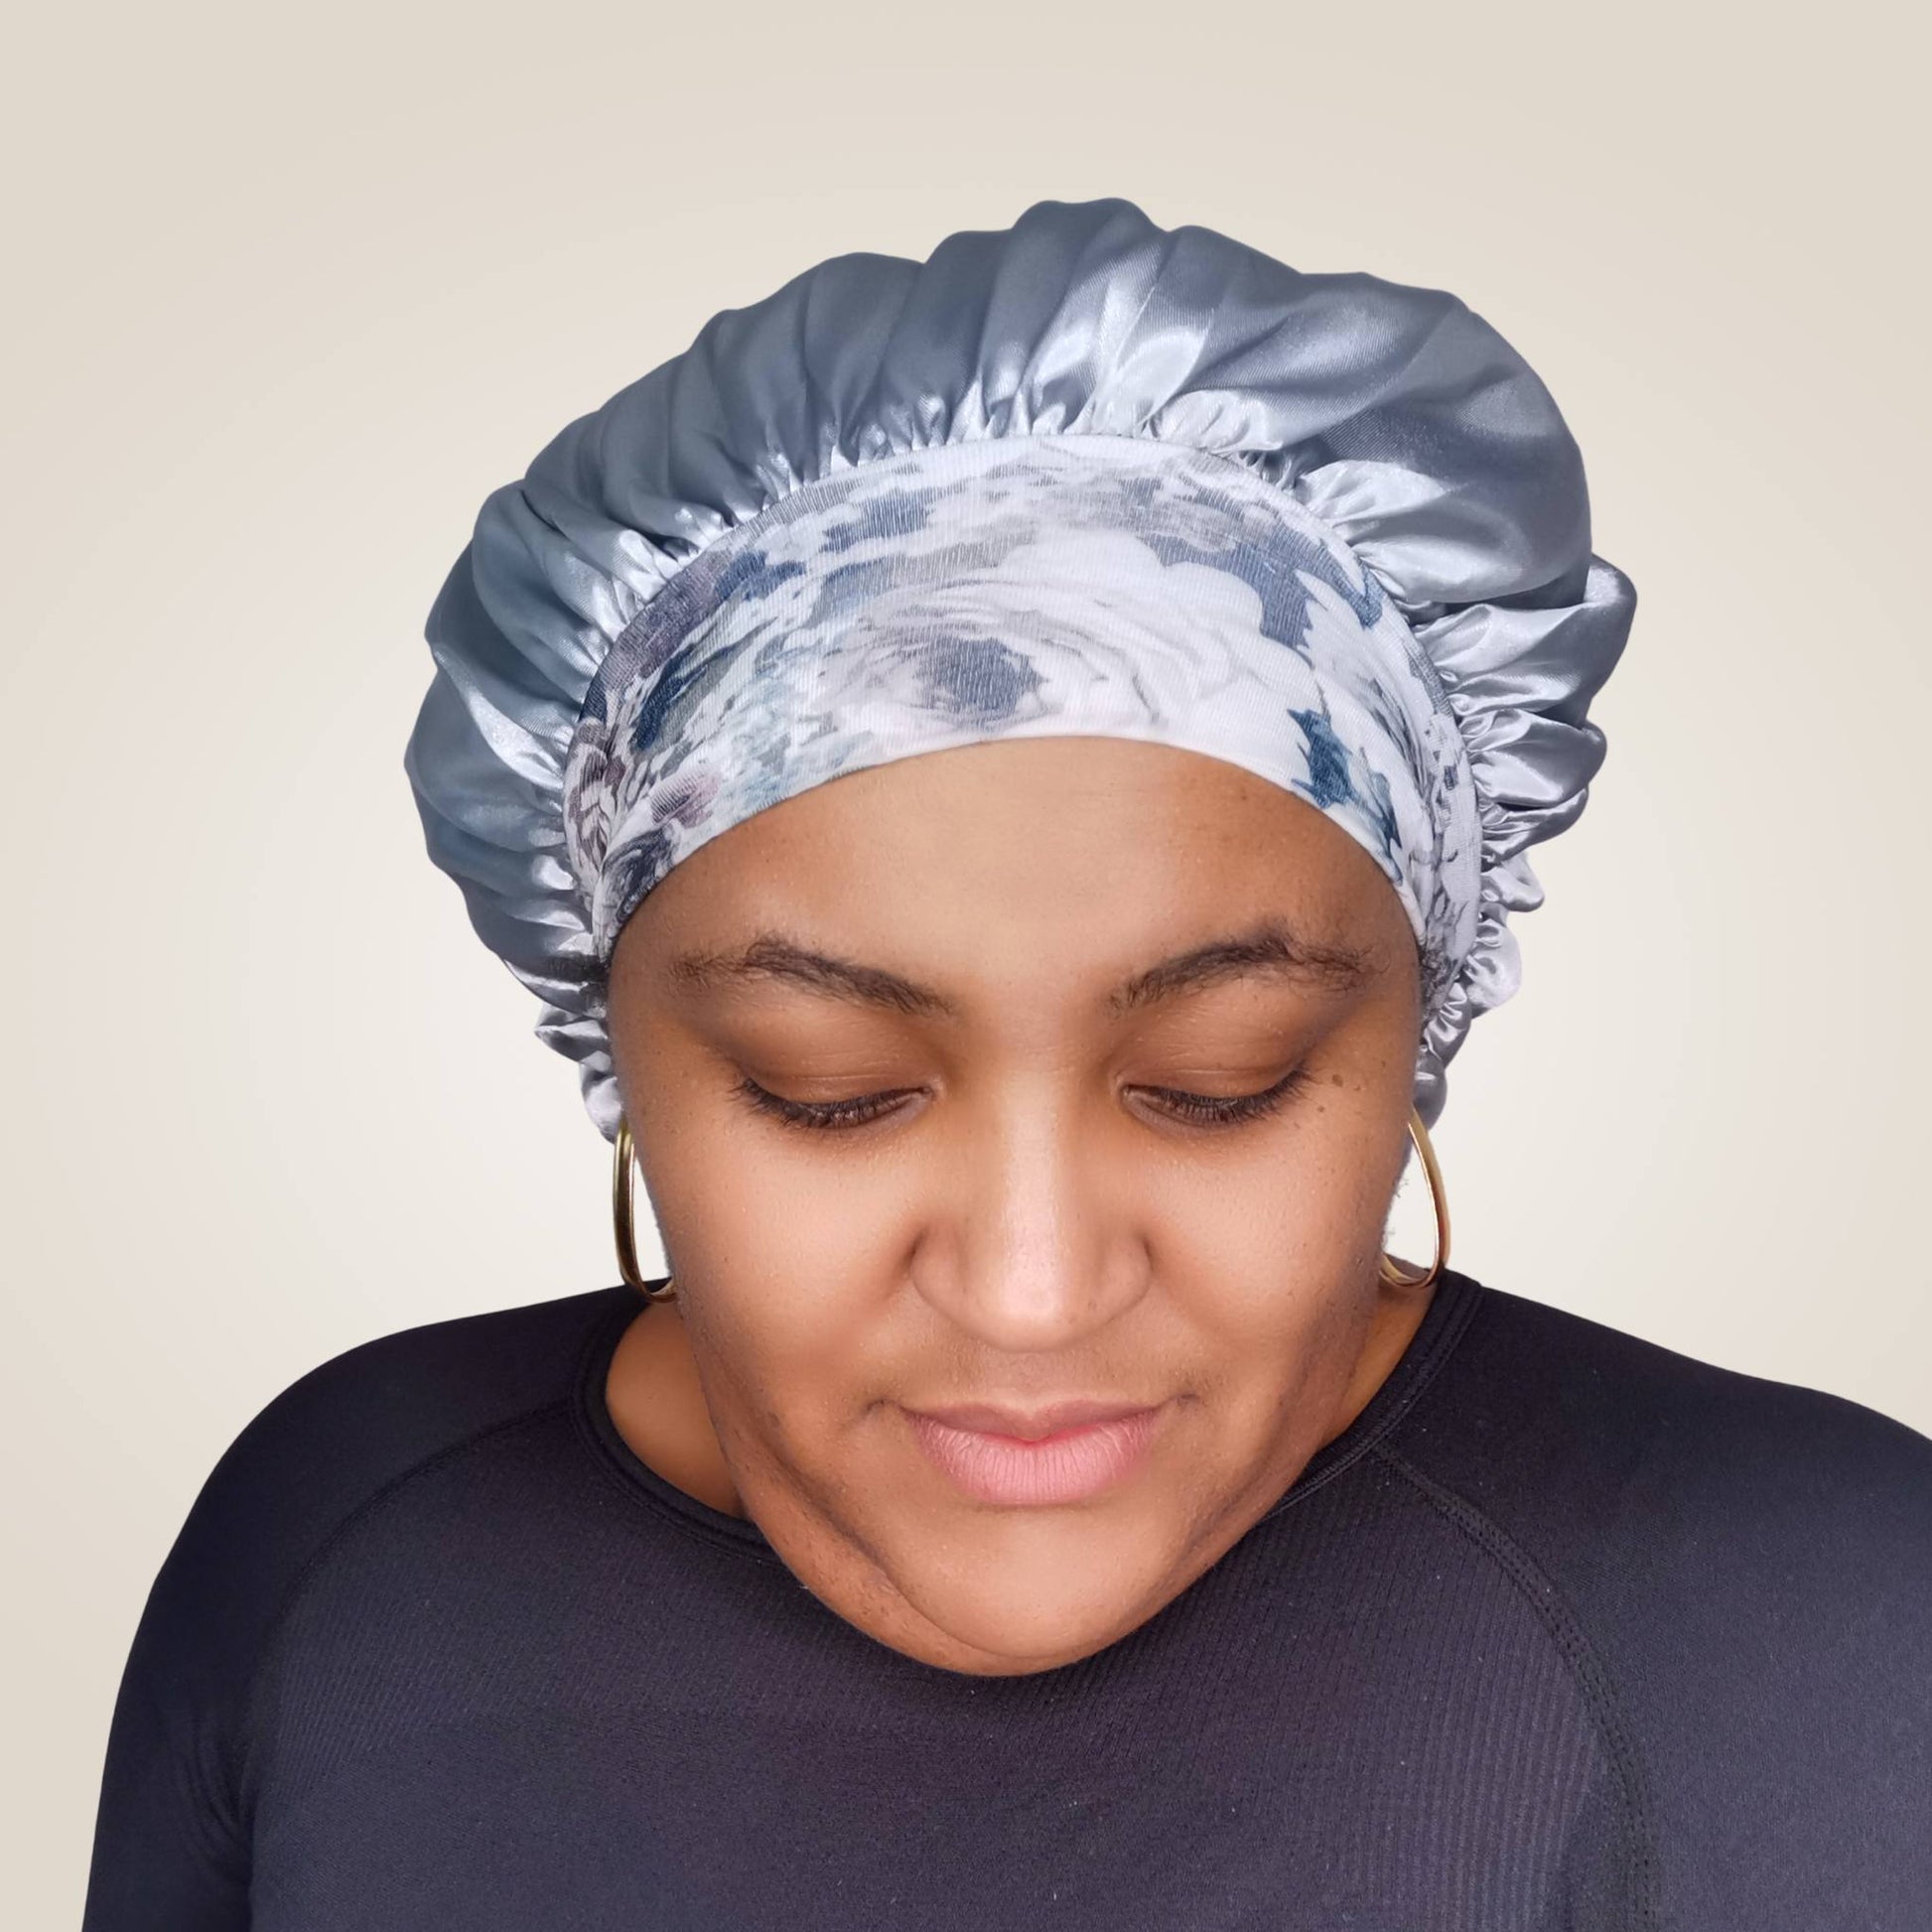 Hair wrap heaven comfort satin bonnet with floral band - silver grey model shot